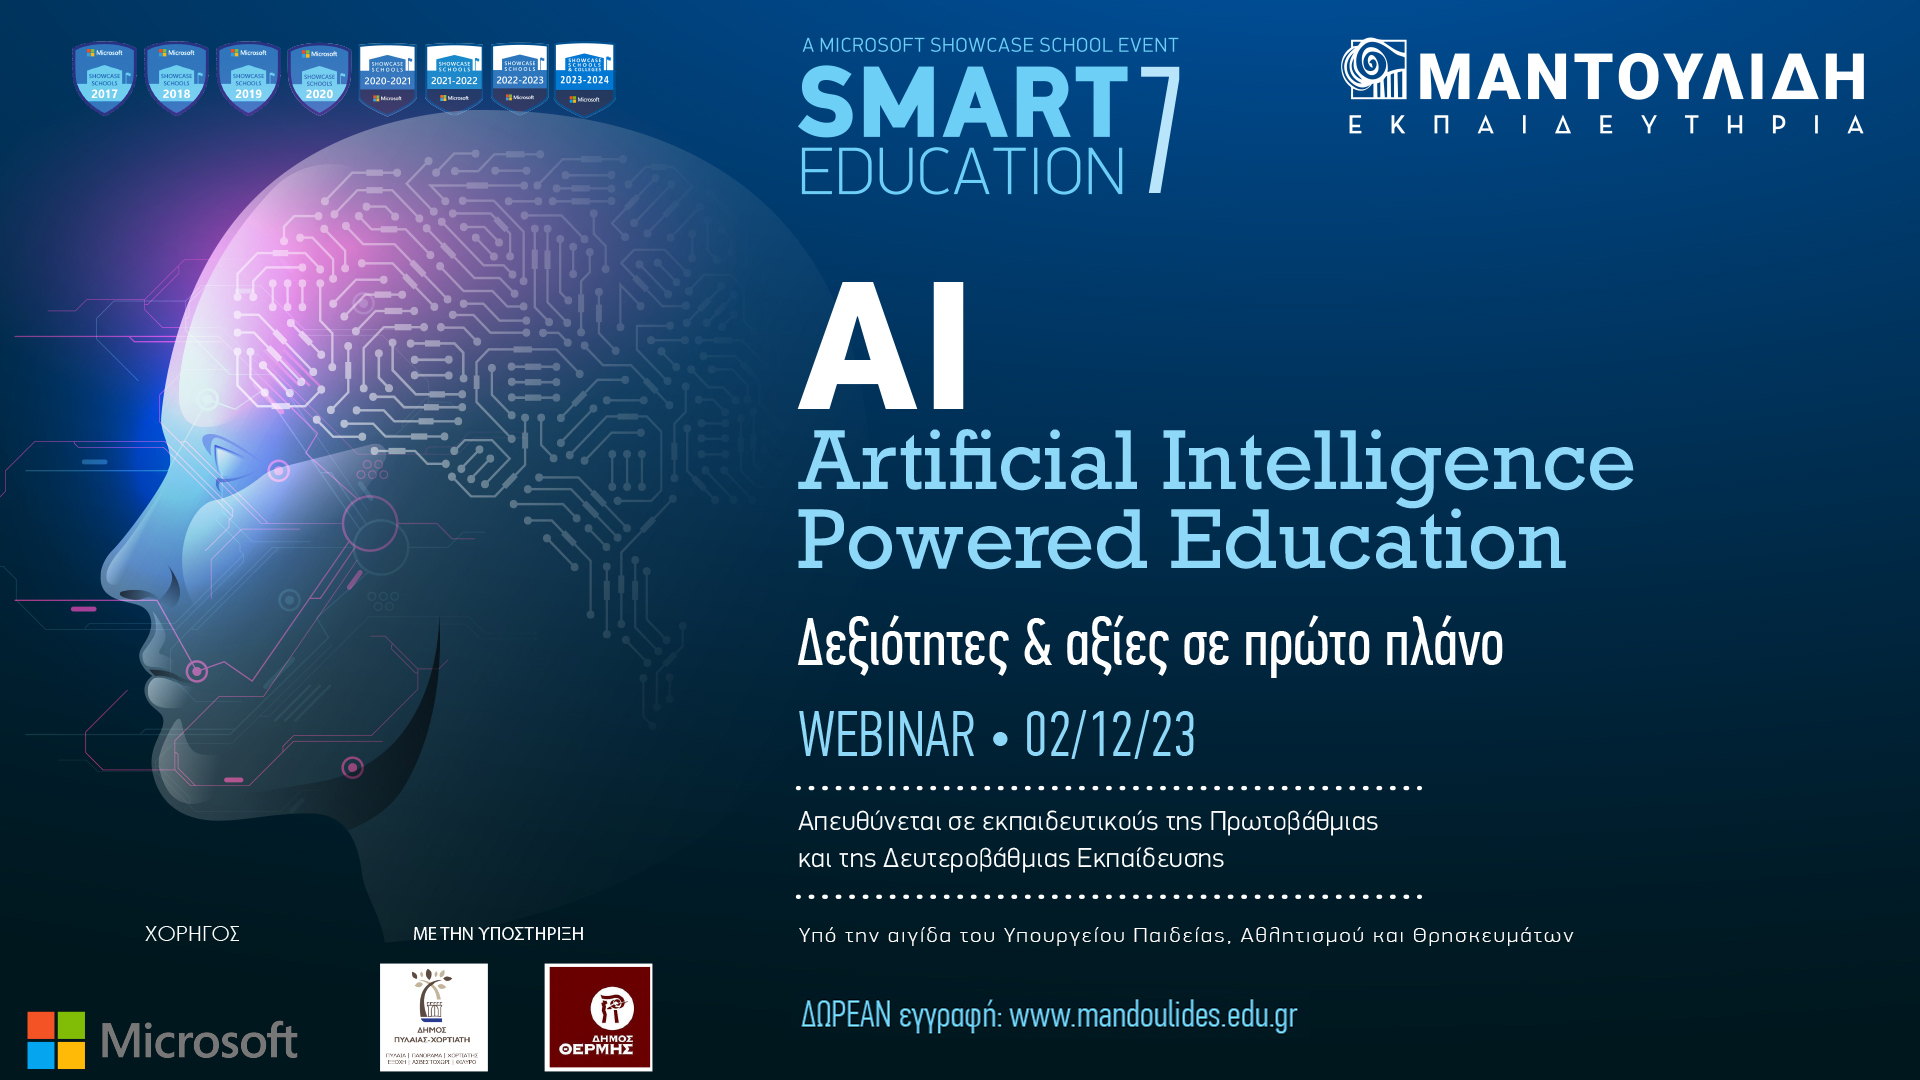 smart-education-1920x1080.jpg